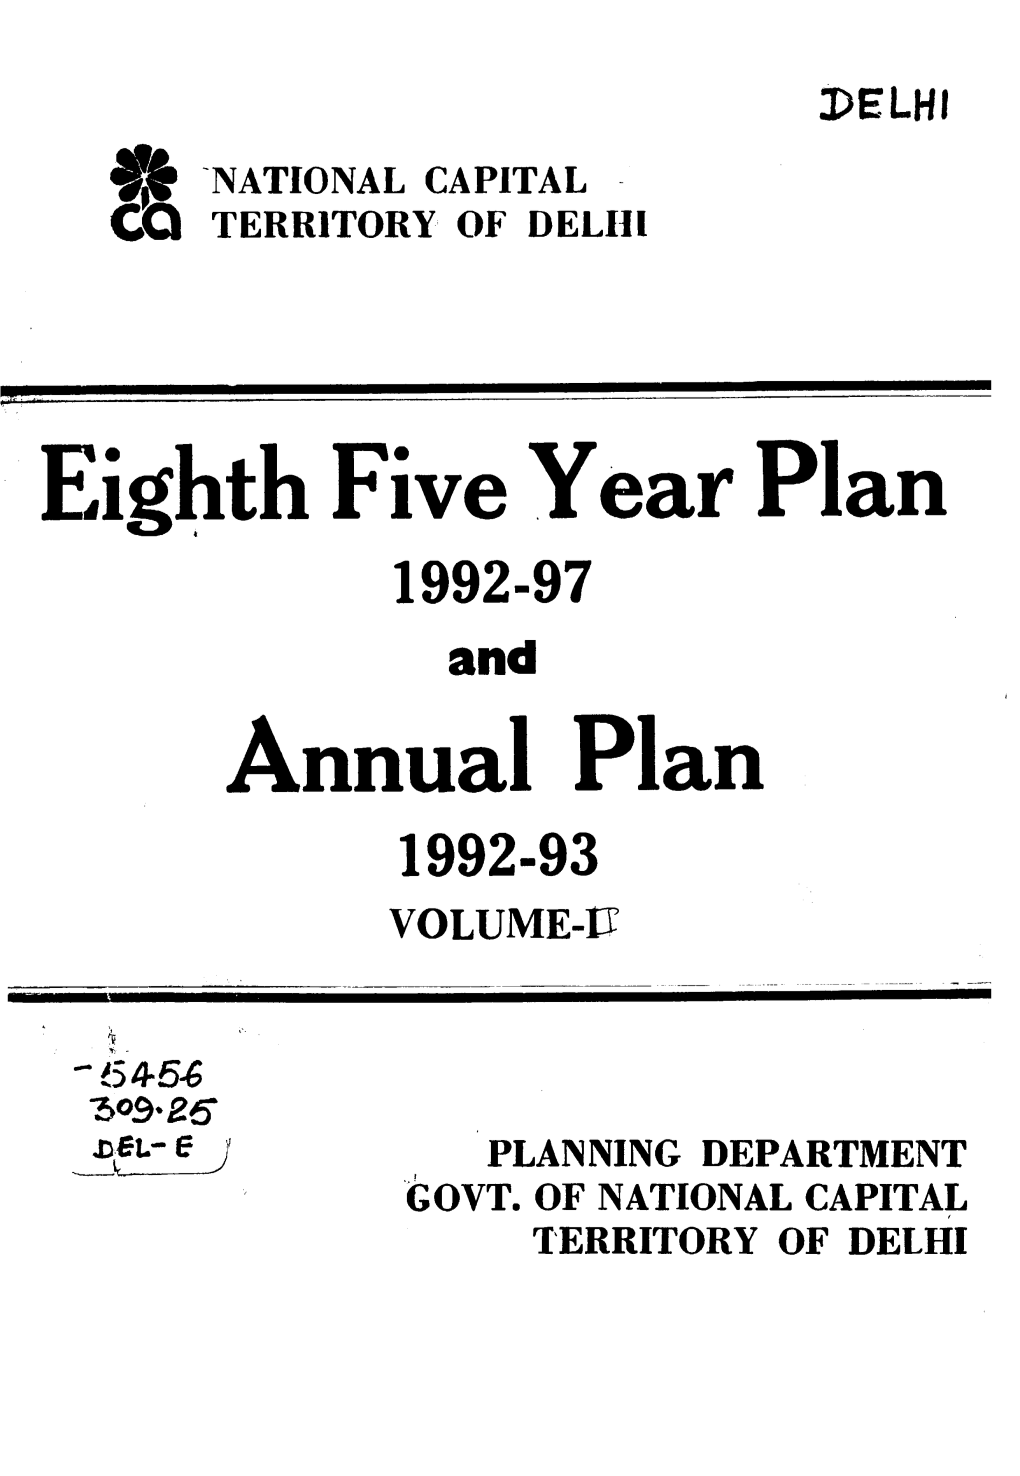 Eighth Five Year Plan Annual Plan